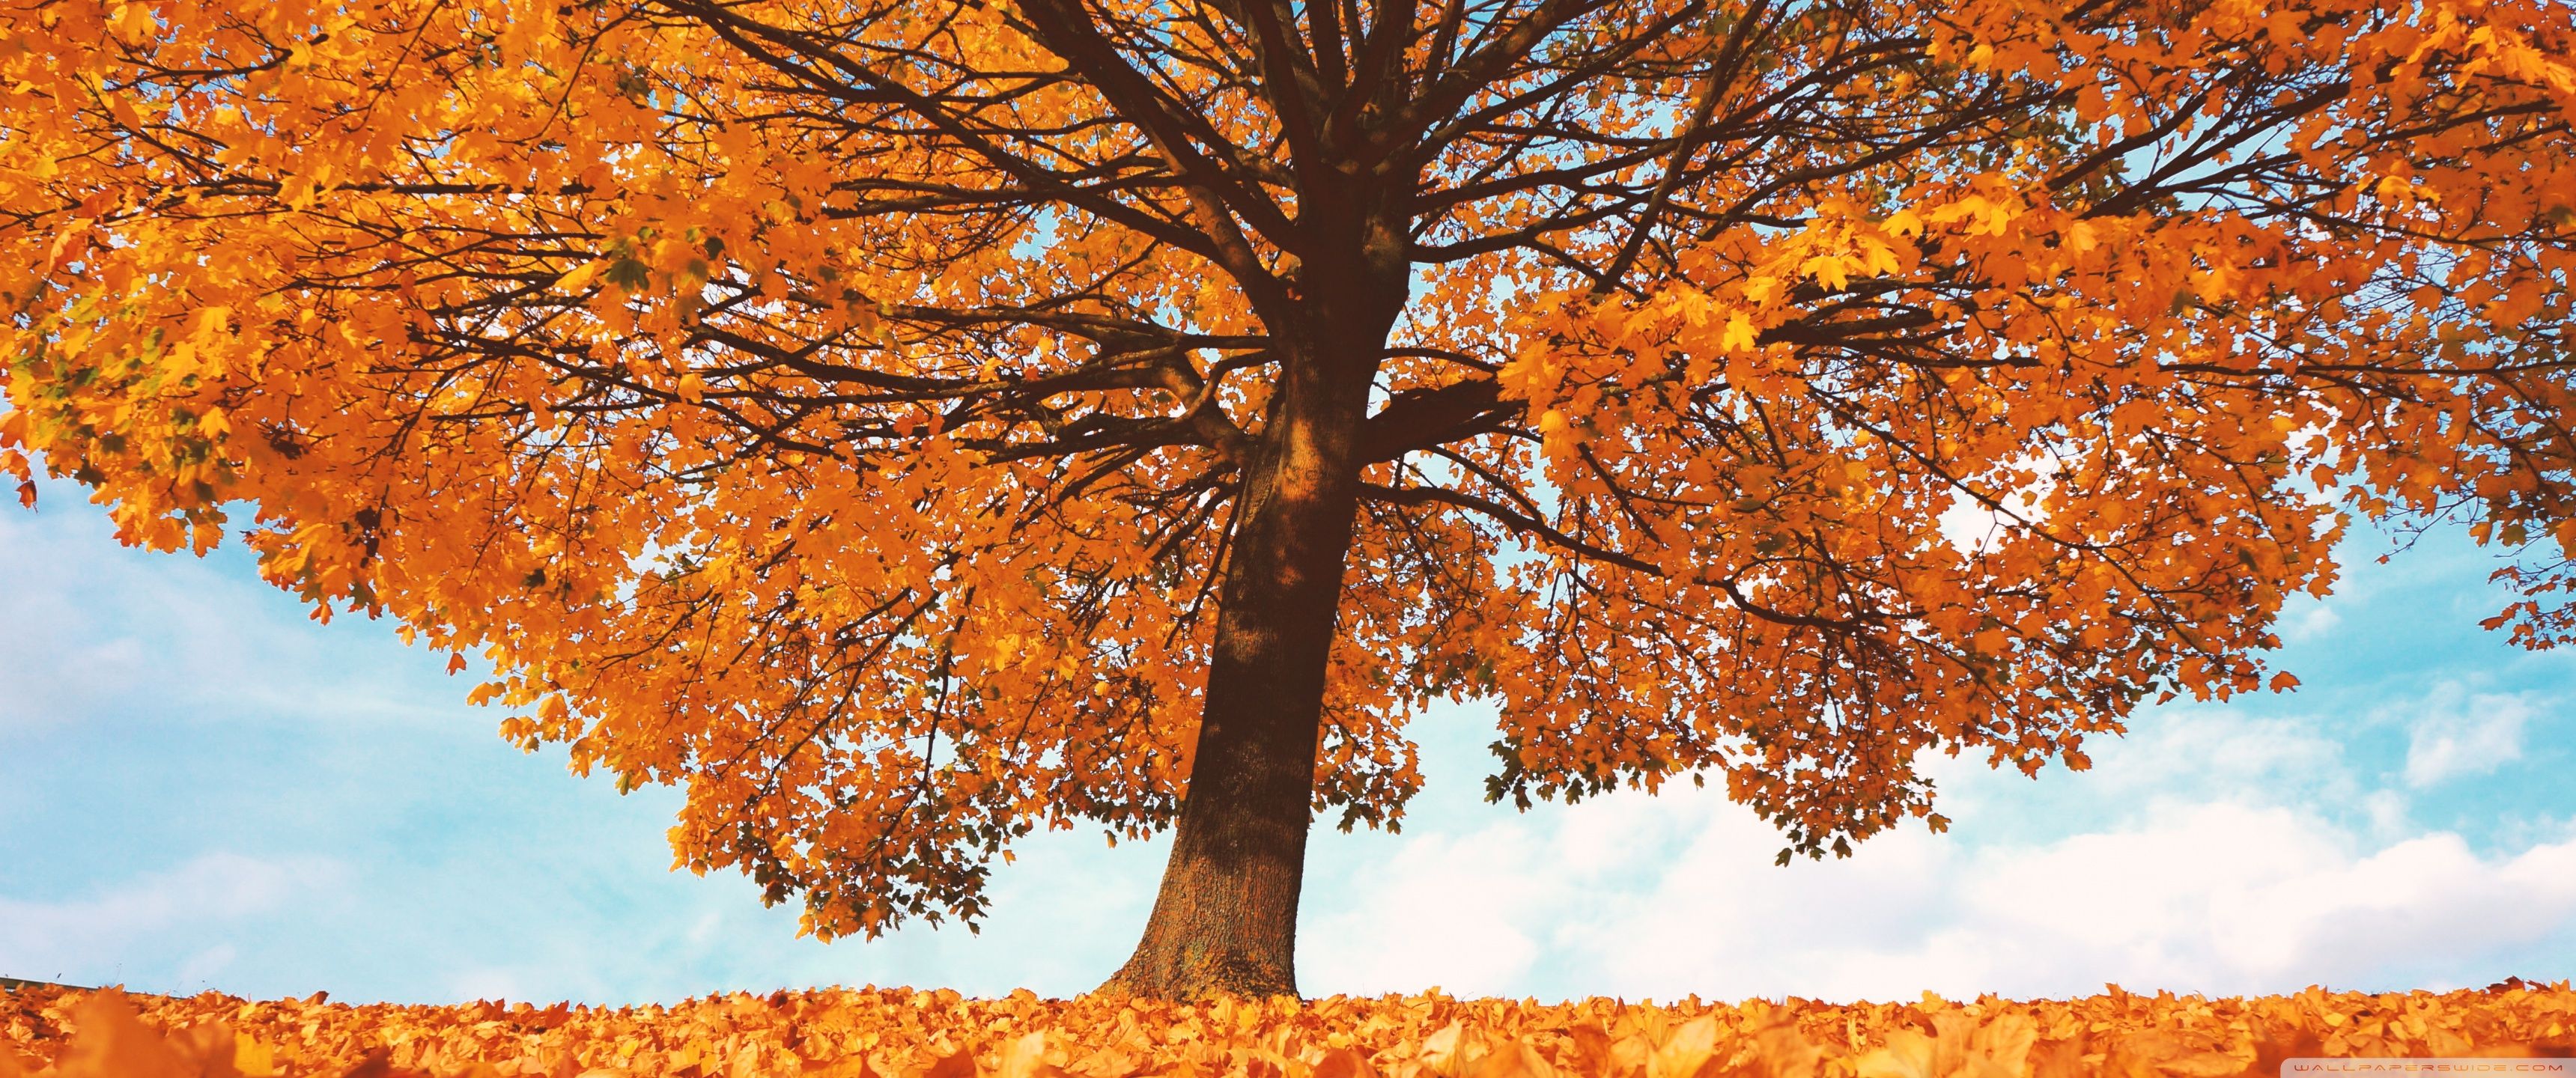 Trees with Yellow Leaves in Fall Ultra HD Desktop Background Wallpaper for 4K UHD TV, Widescreen & UltraWide Desktop & Laptop, Tablet